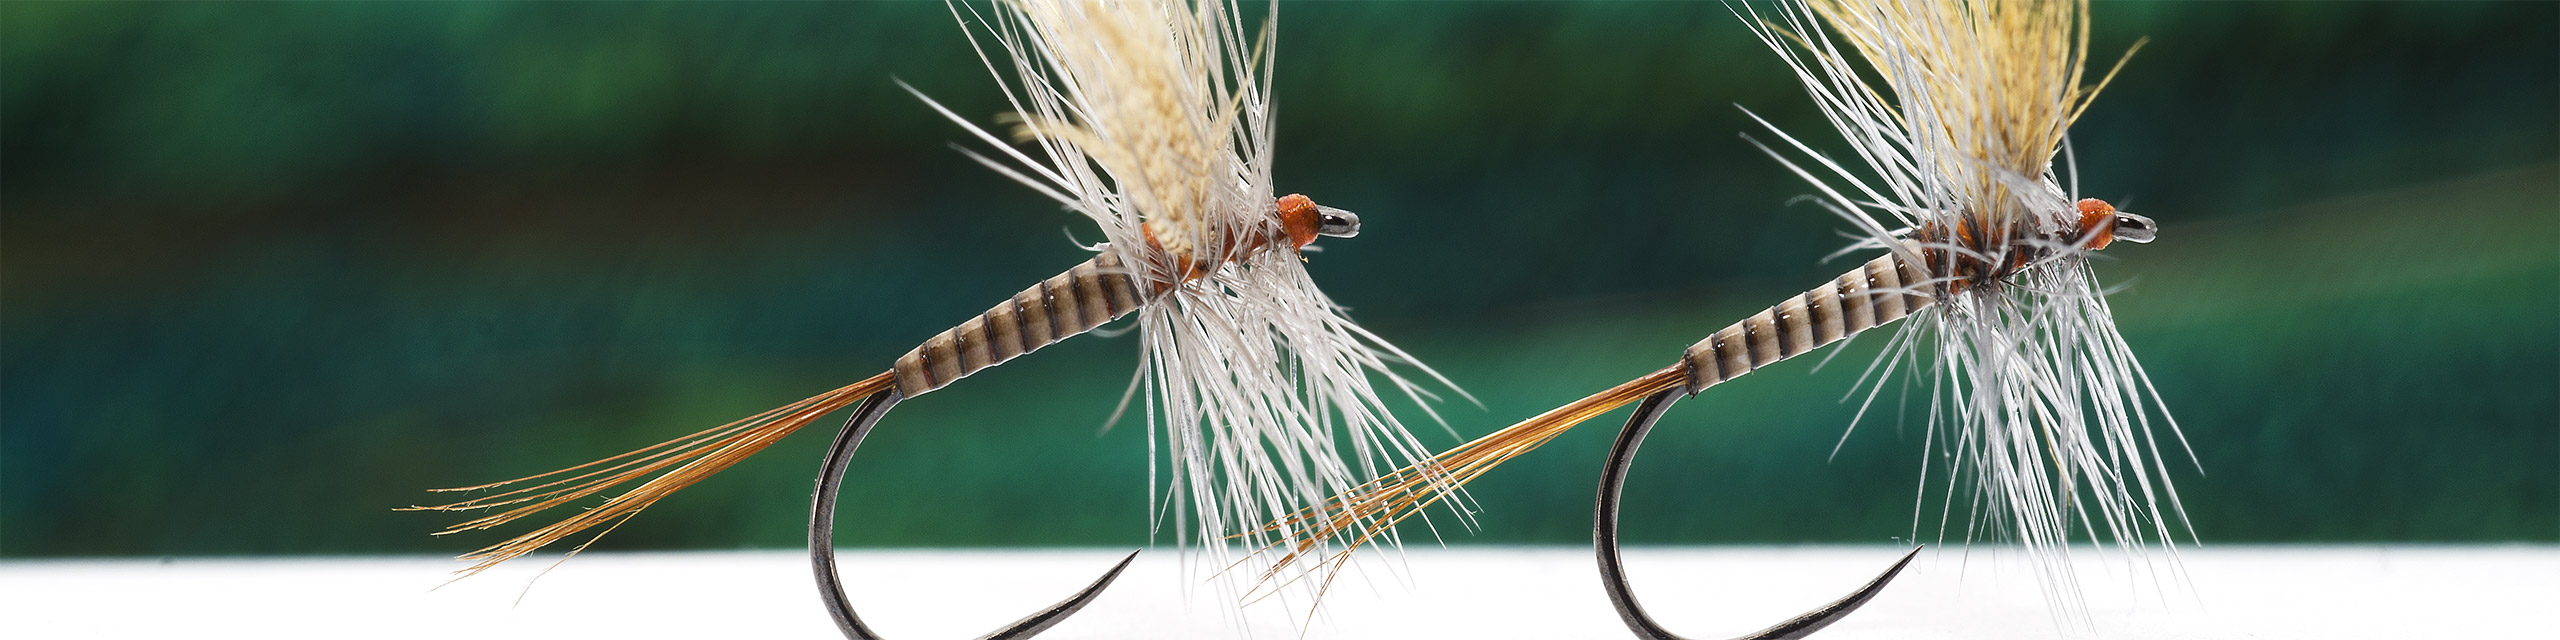 Fishing Flies & Fly Tying Materials - Troutline